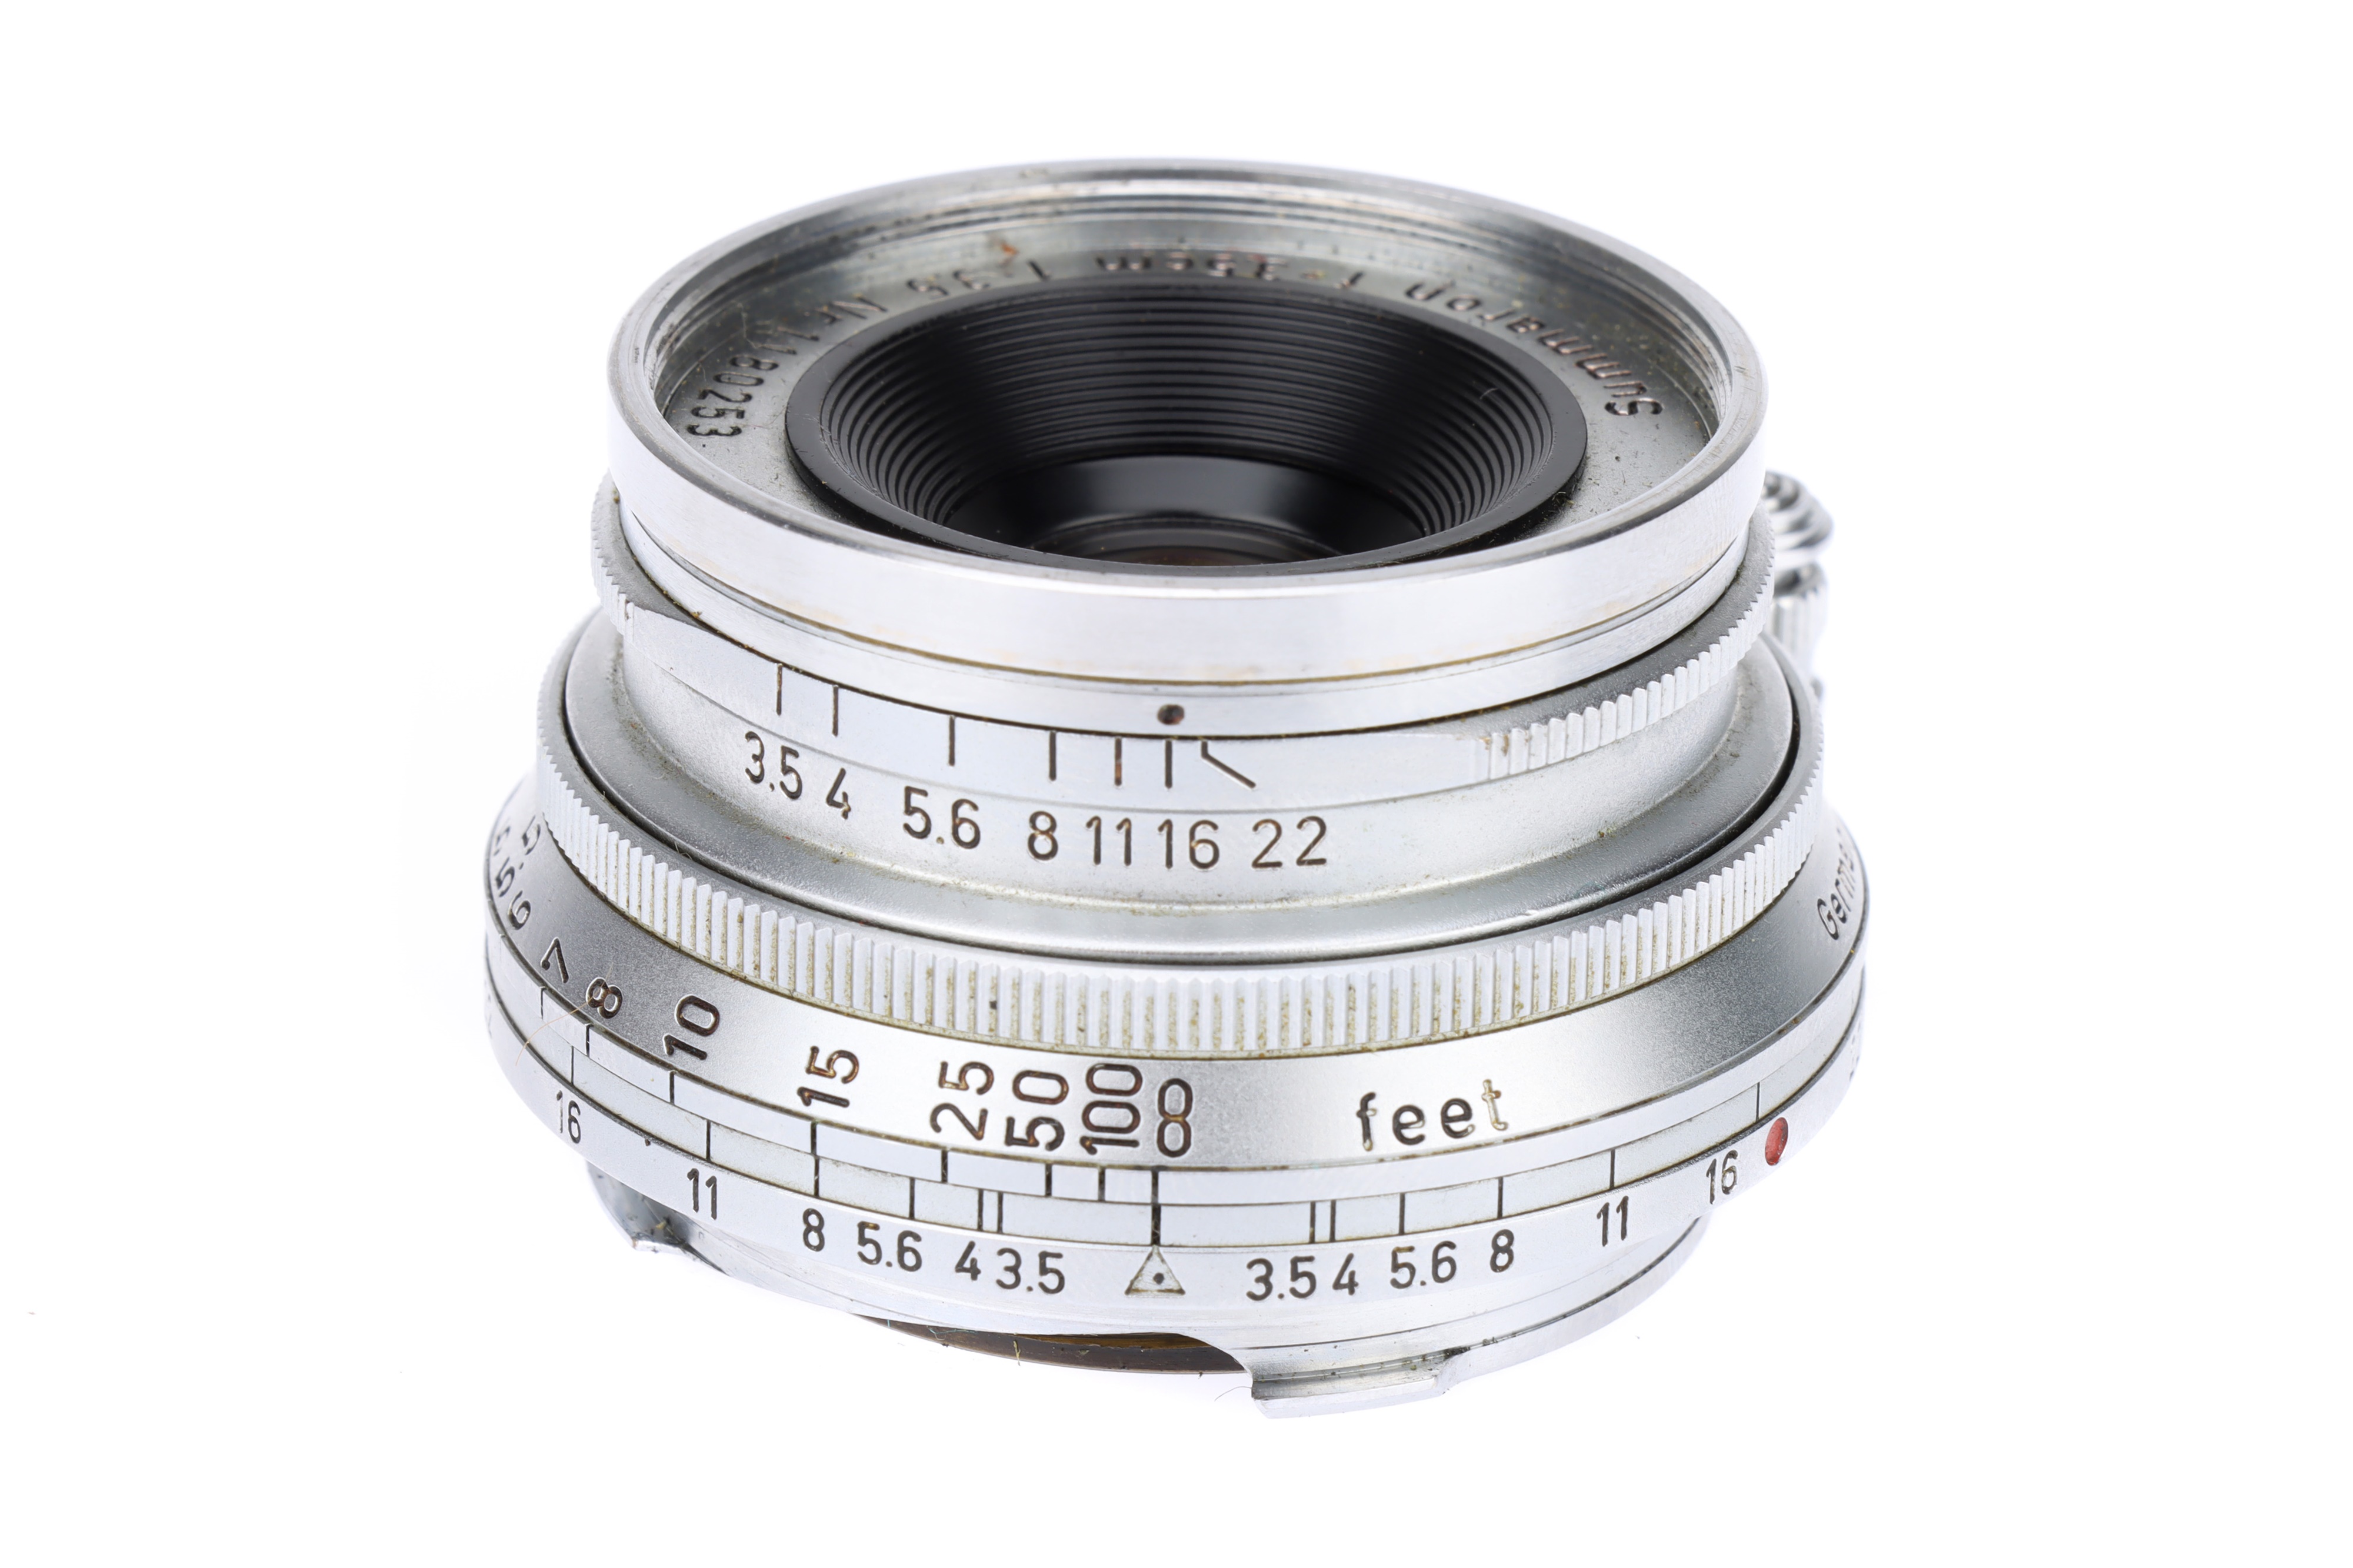 A Leitz Summaron f/3.5 35mm Lens,